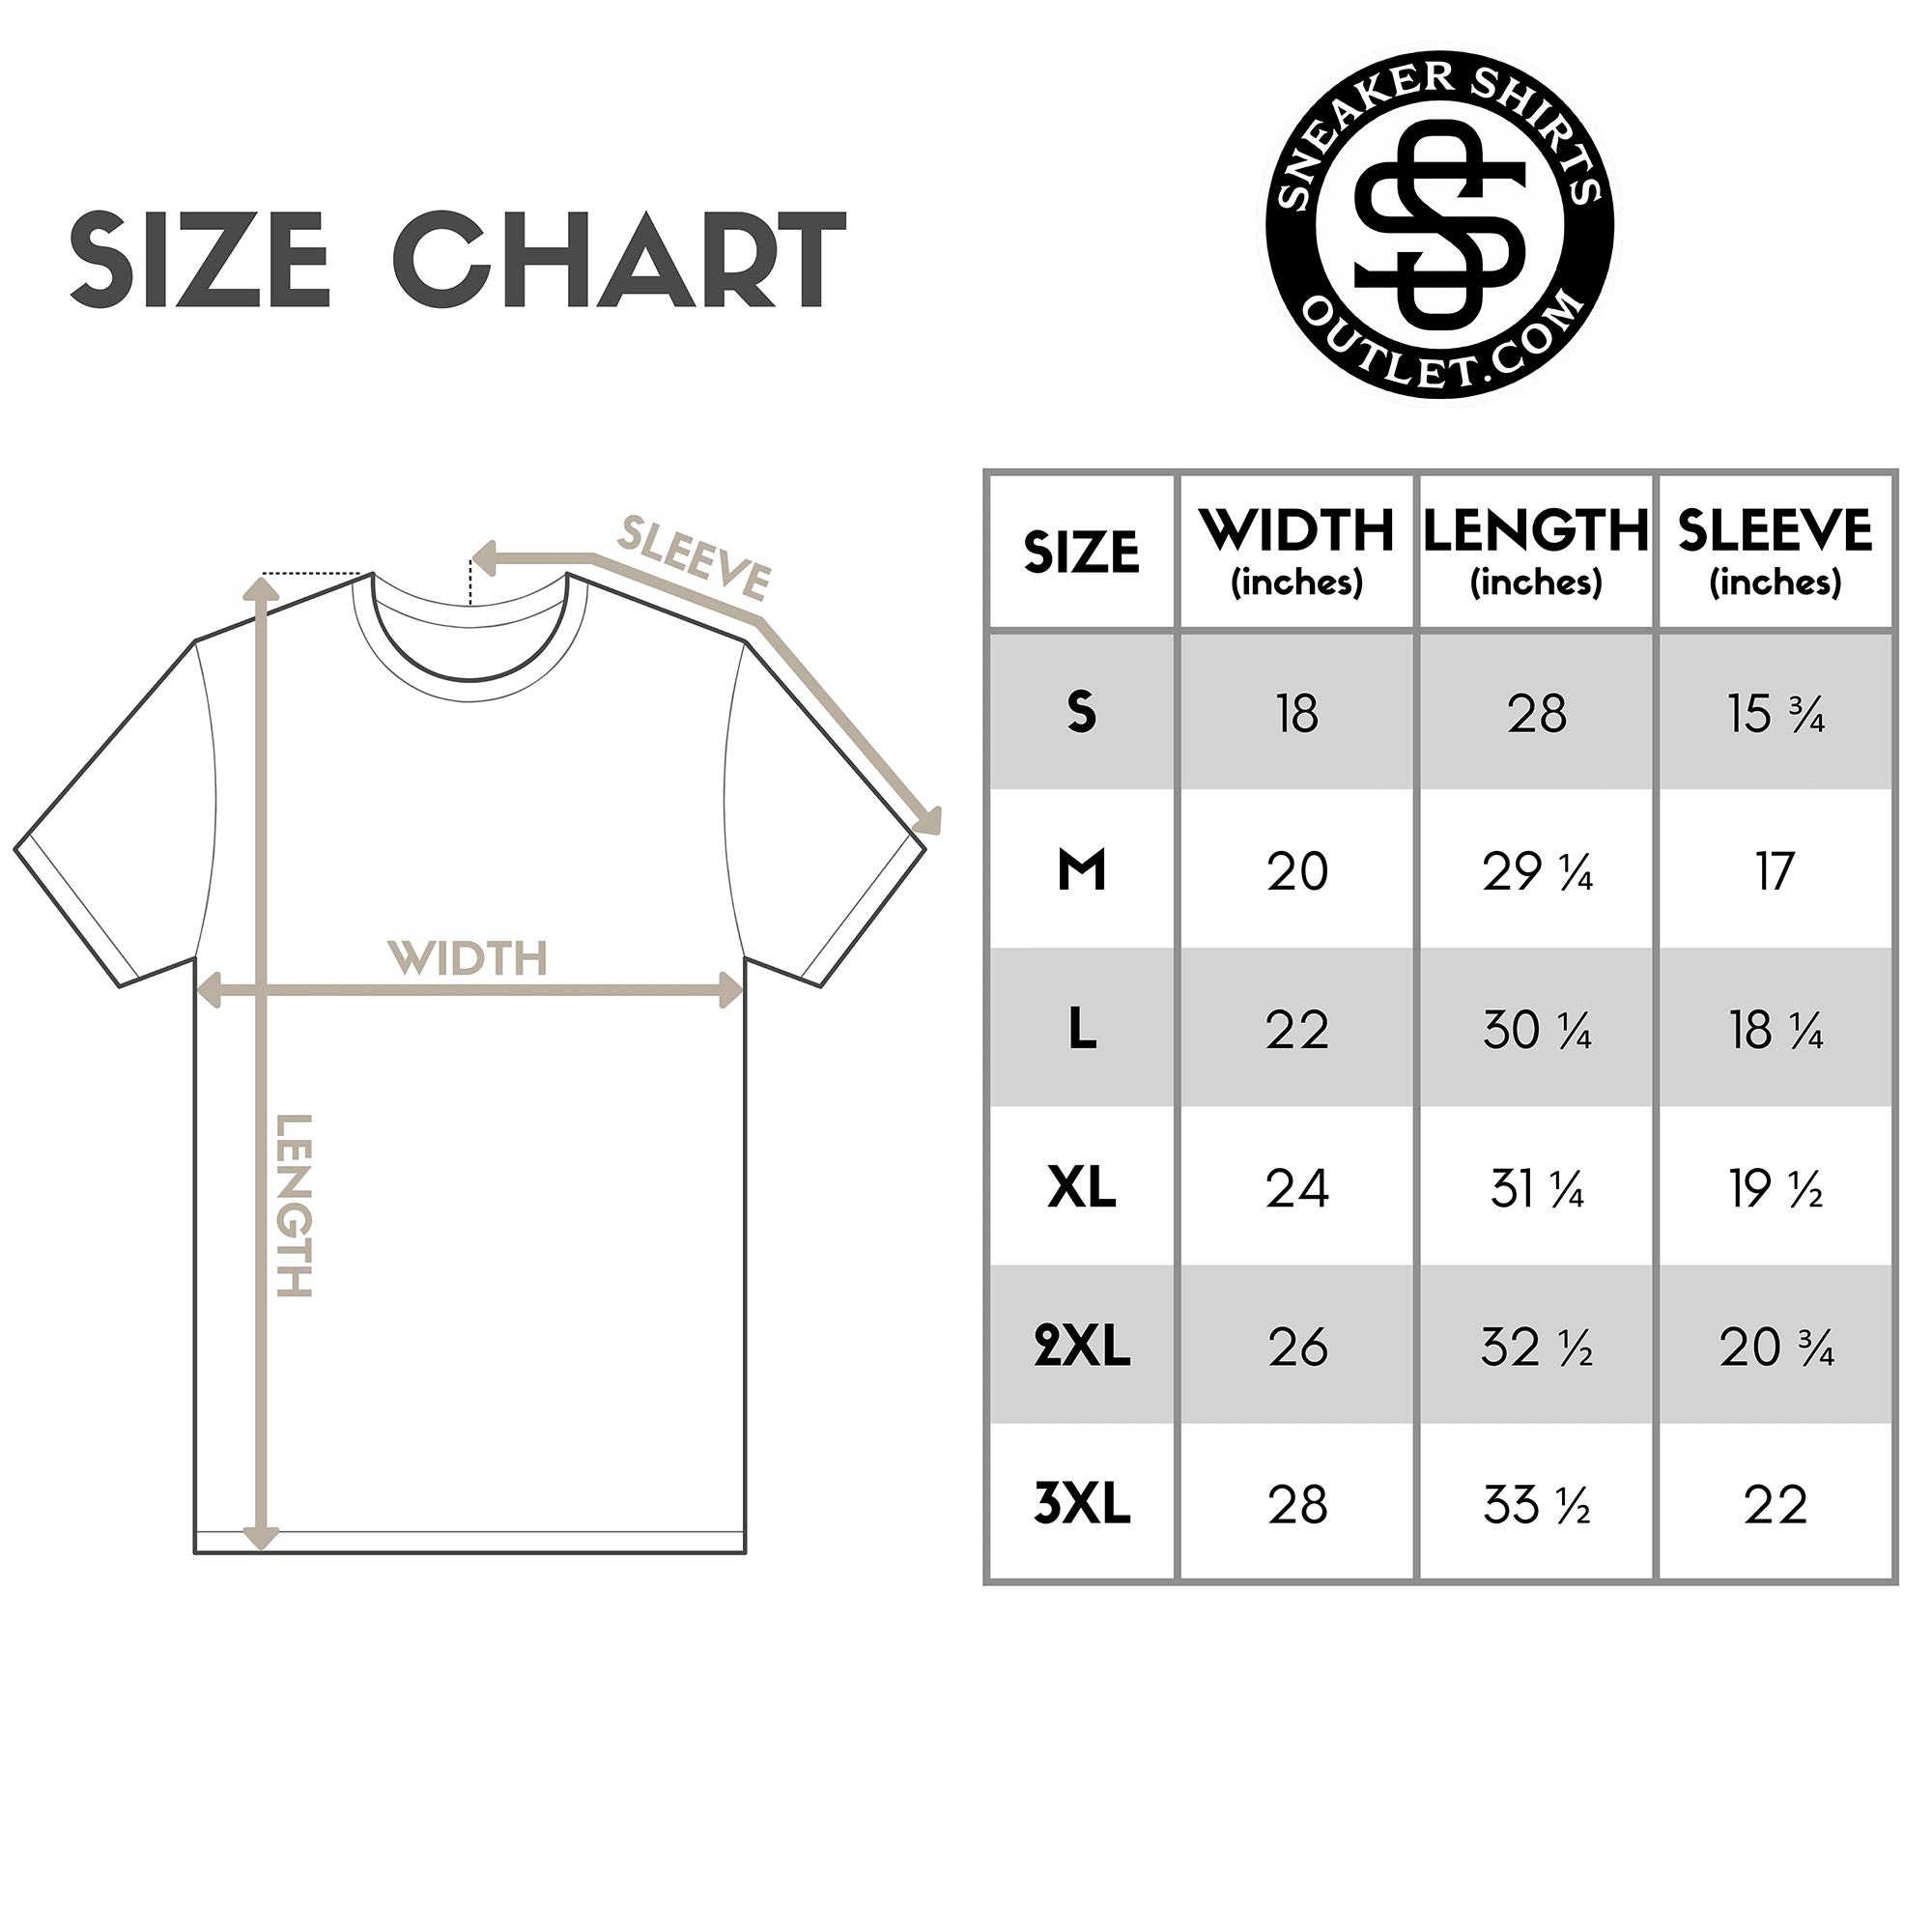 Rare Breed Shirt size chart photo